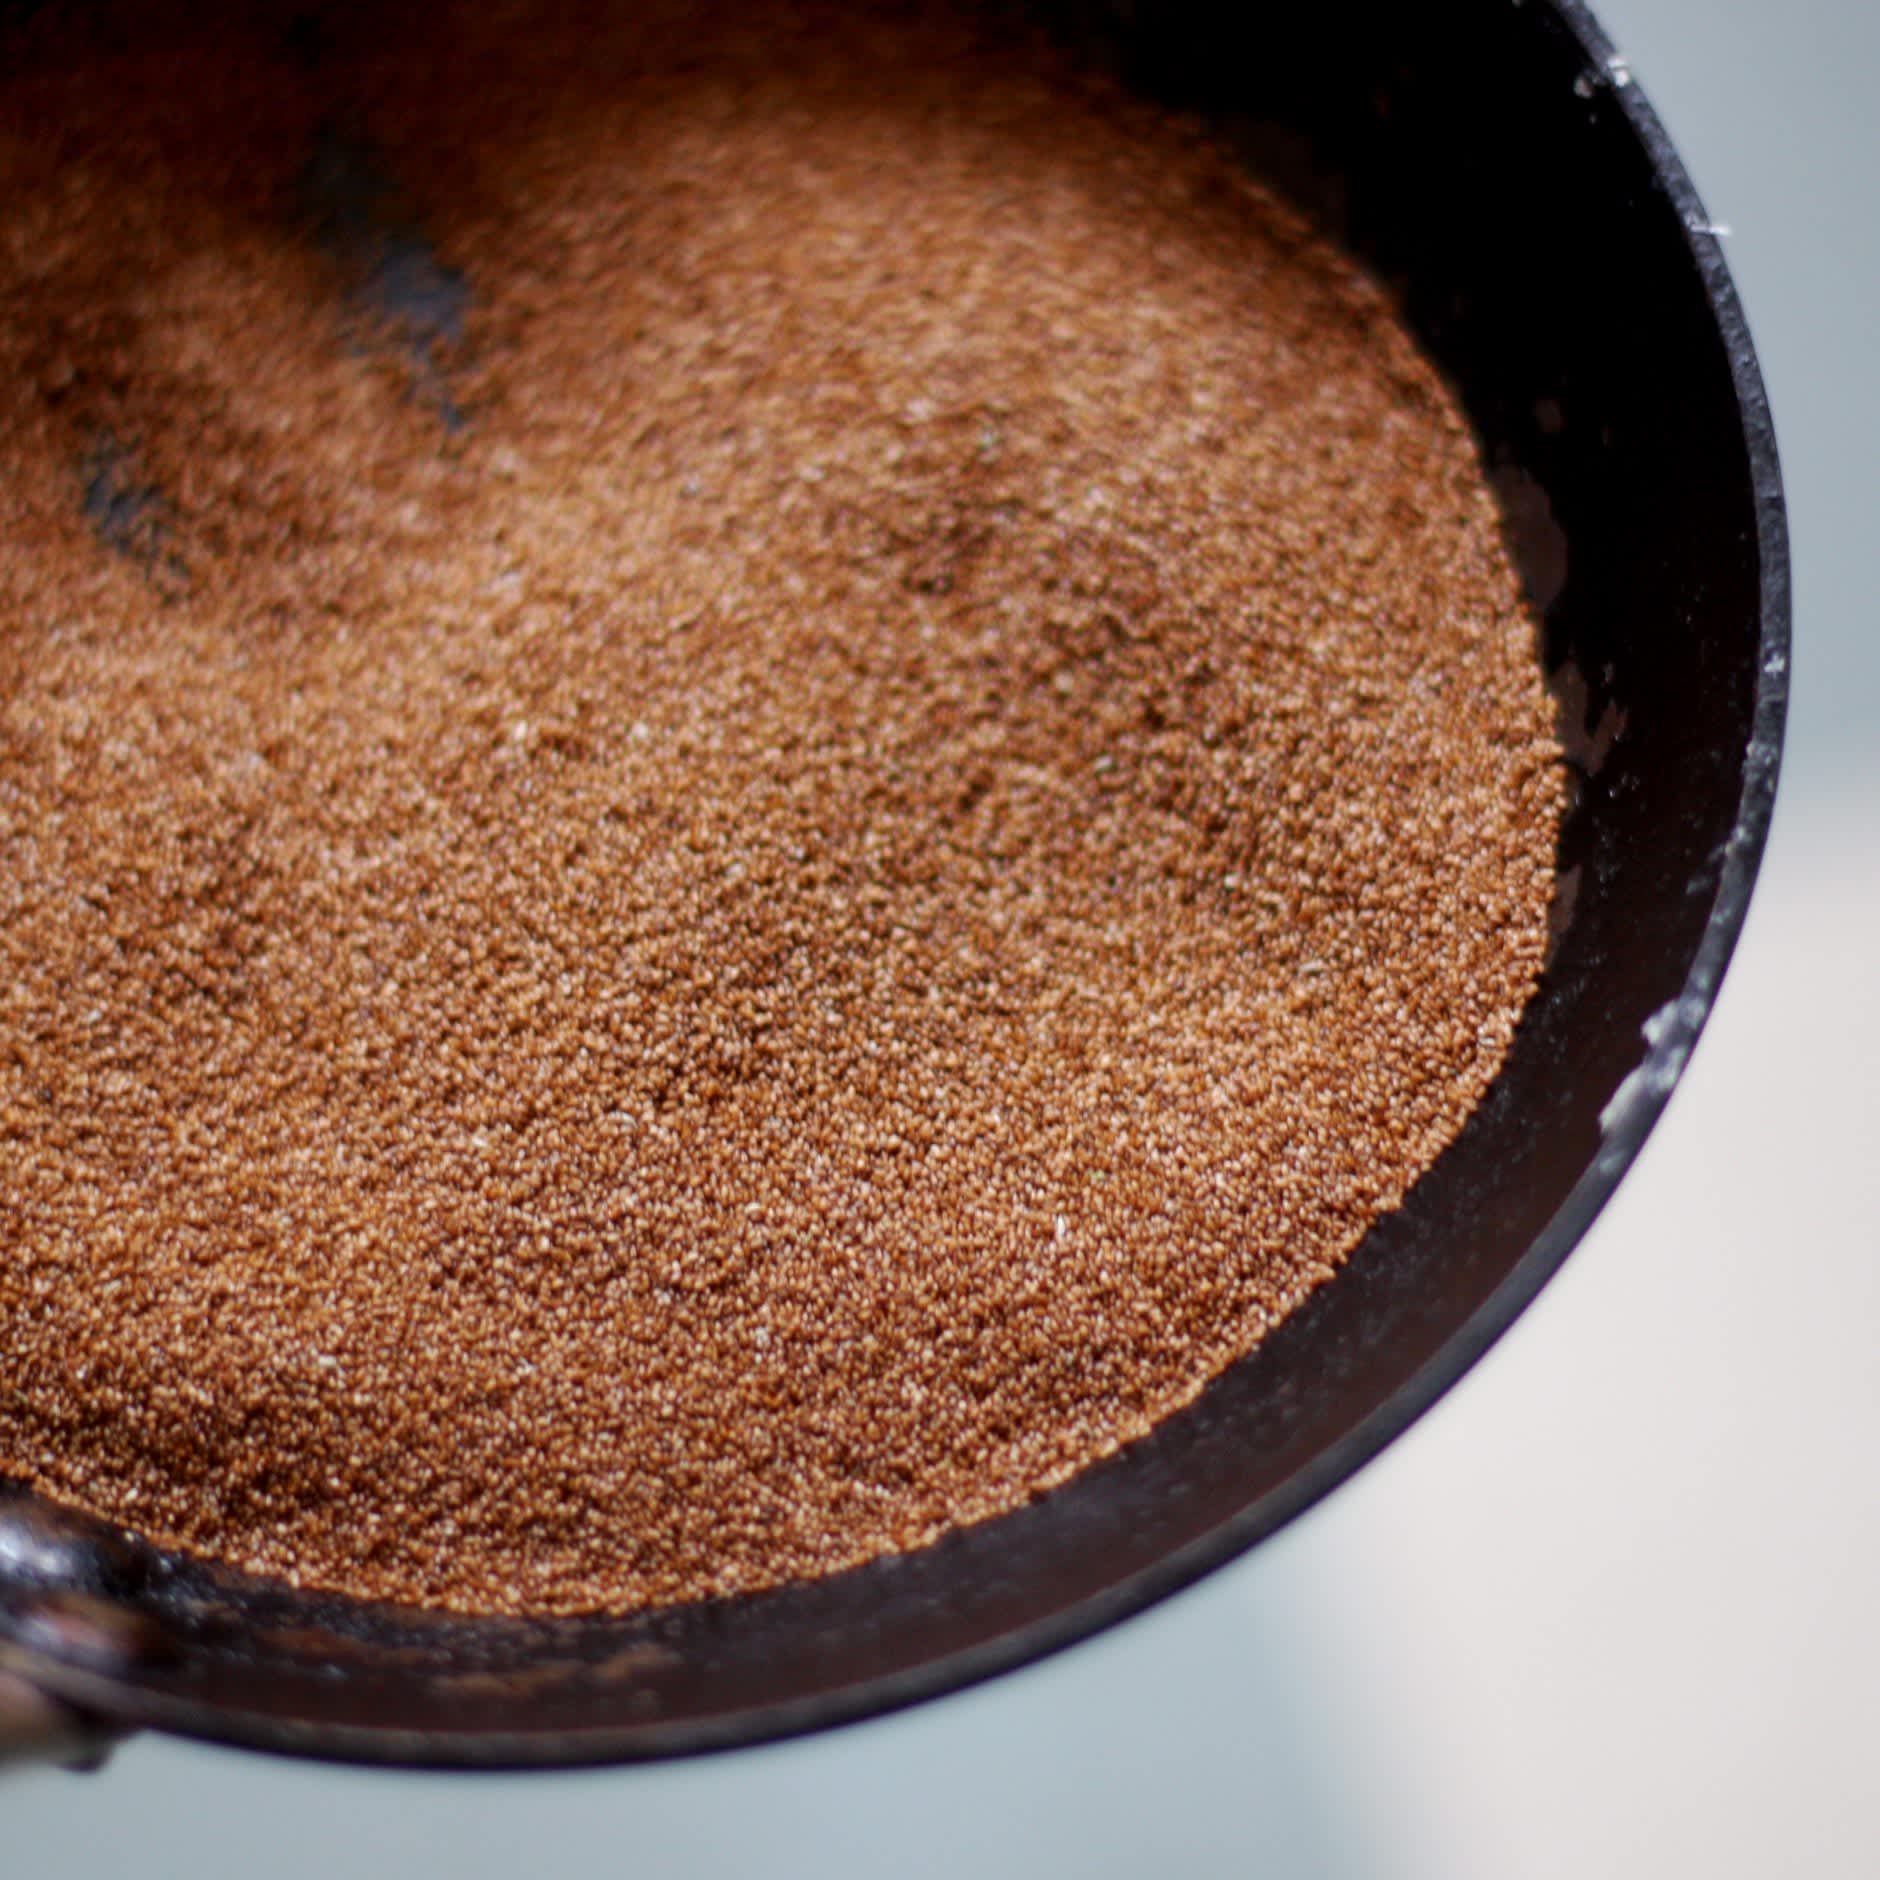 How To Make Whole-Grain Teff Porridge | Kitchn